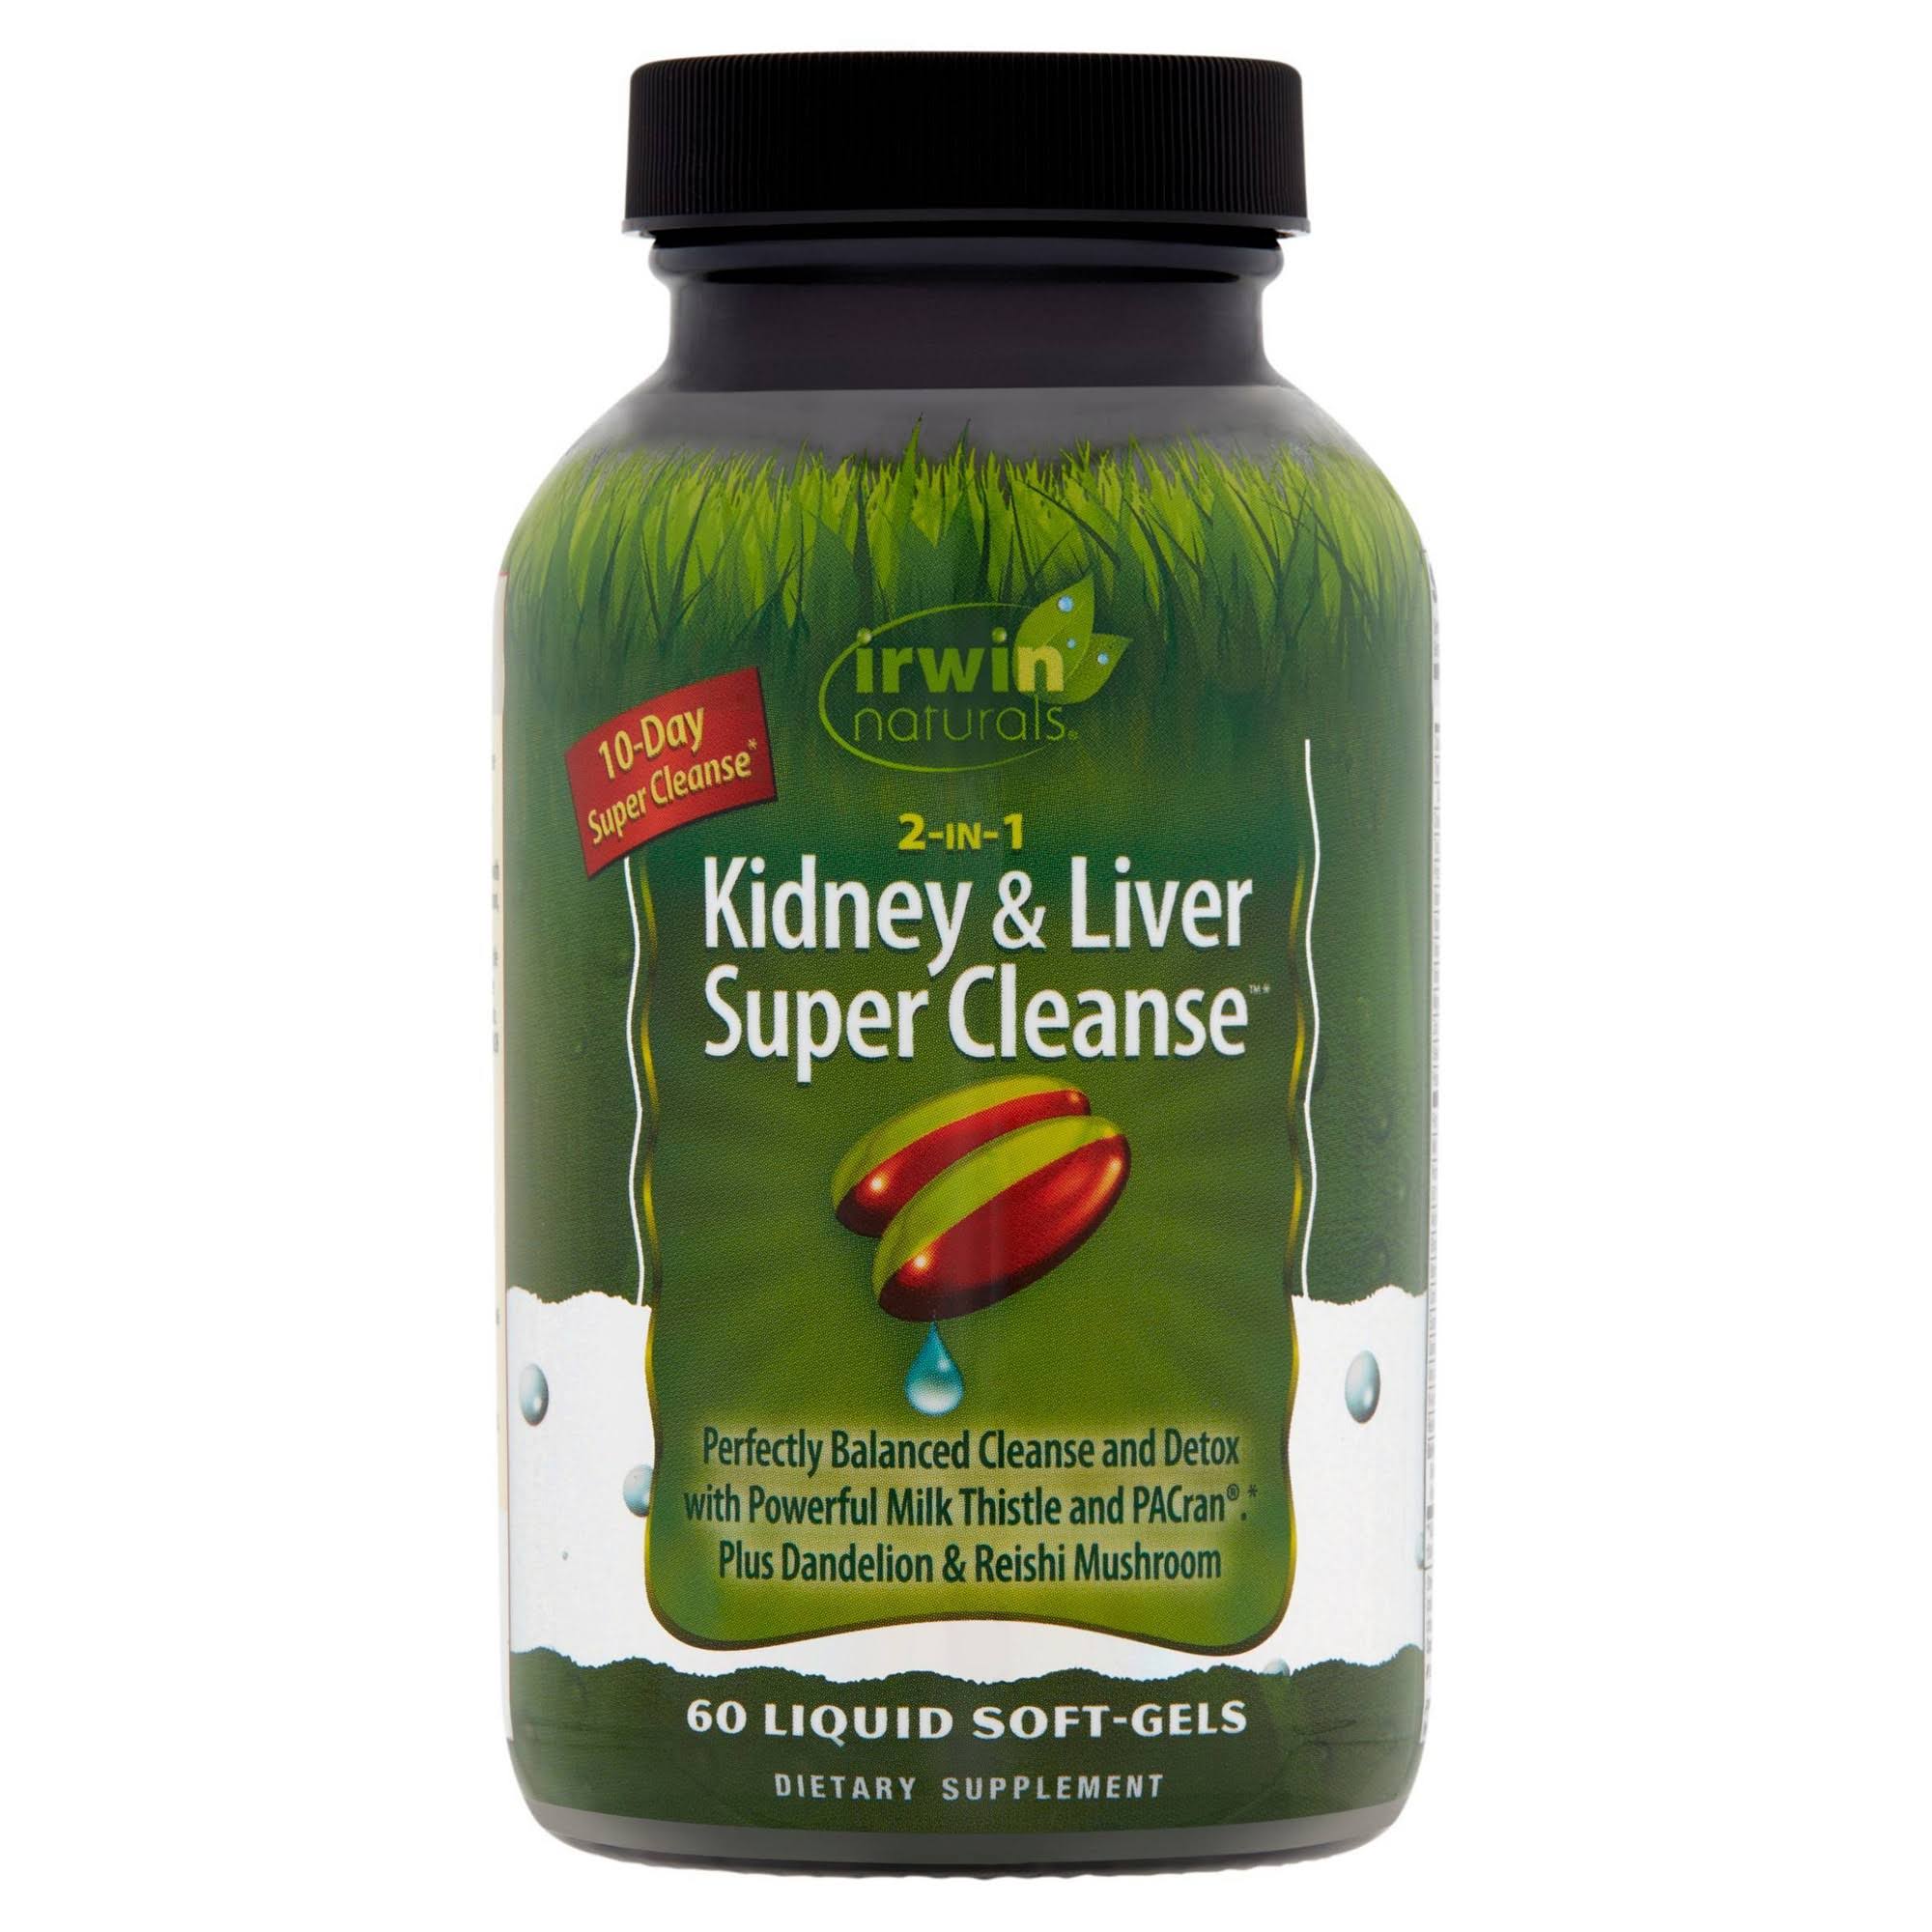 Irwin Naturals 2-in-1 Kidney & Liver Super Cleanse | 60 Liquid Softgels